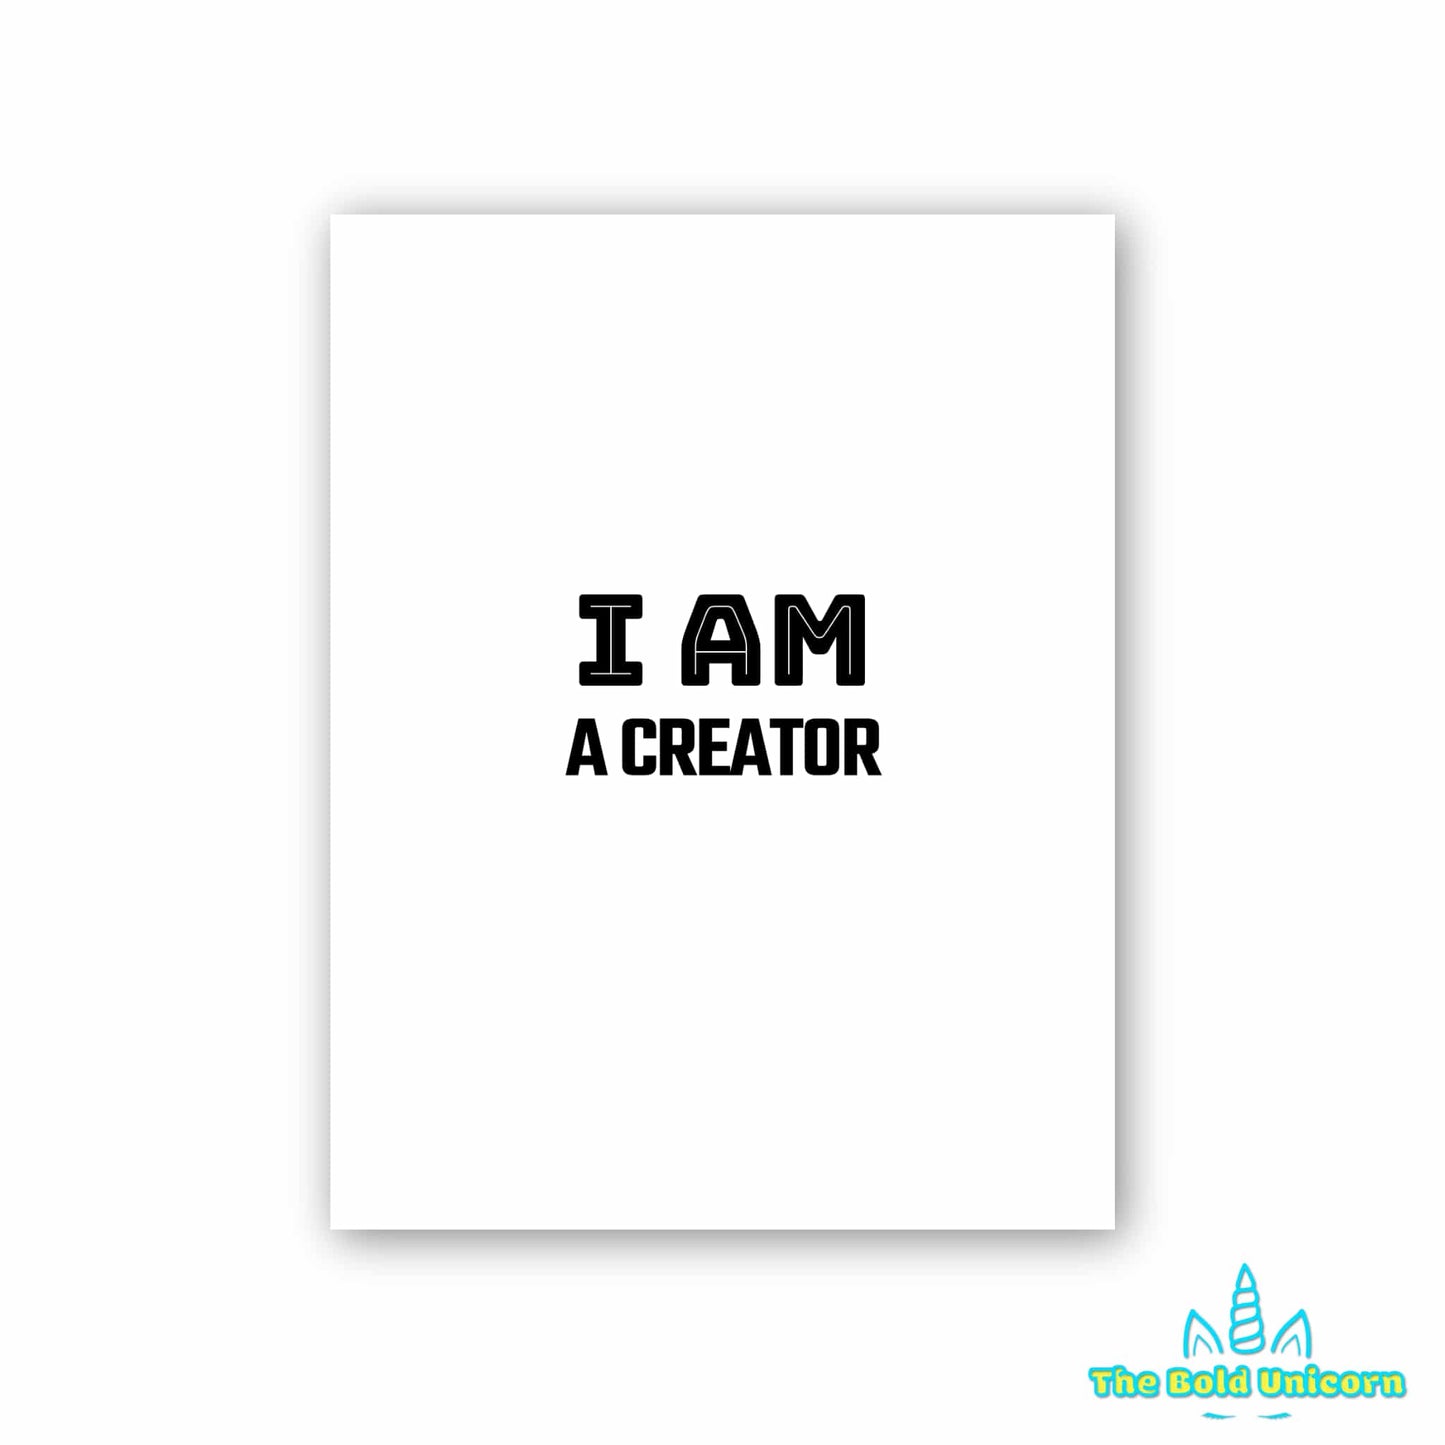 I AM A CREATOR